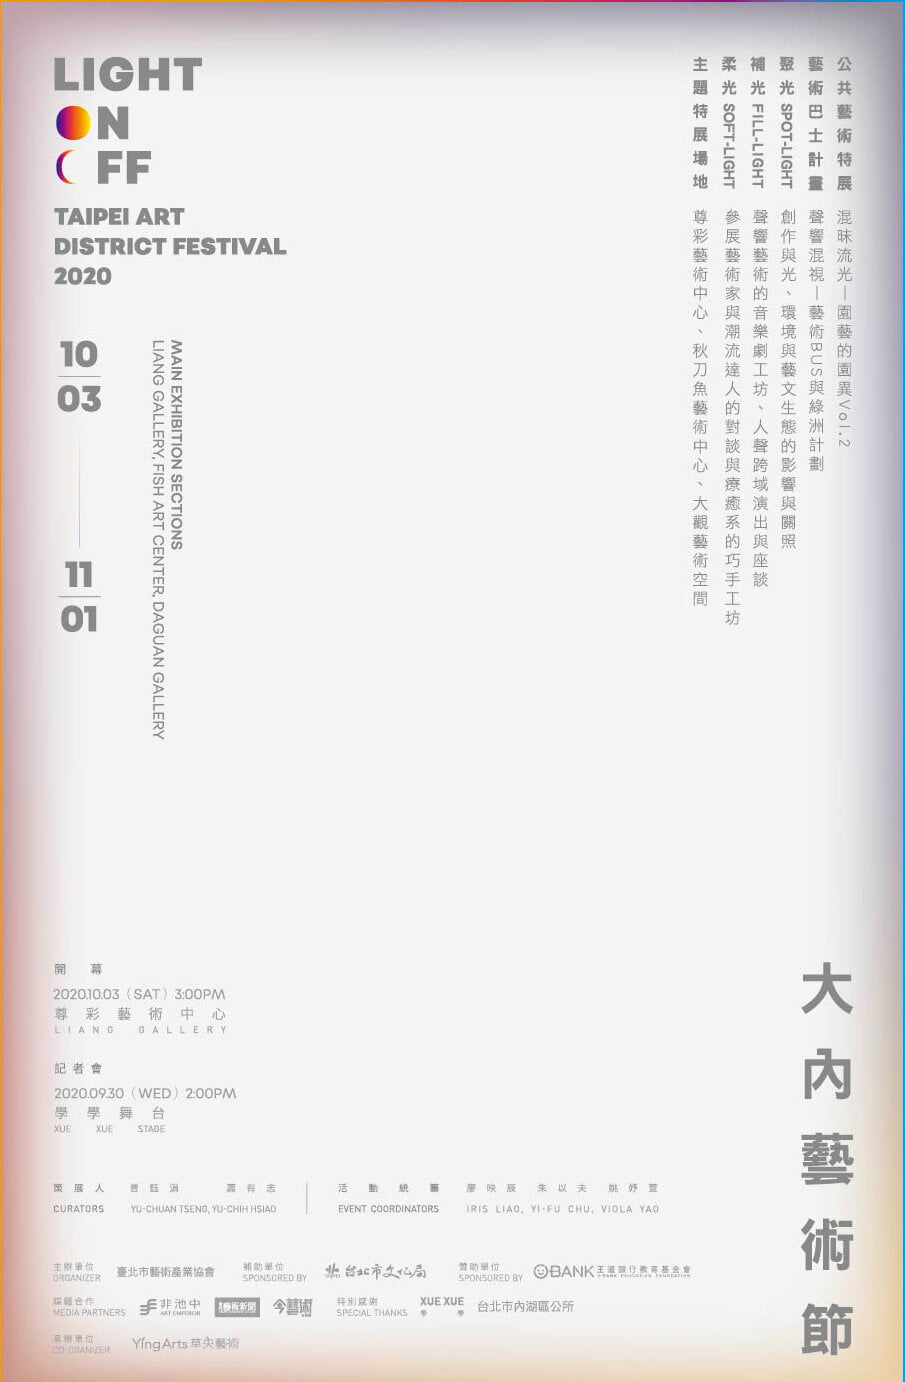 Light On/OFF, 2020 Taipei Art District Festival, Taipei, Taiwan